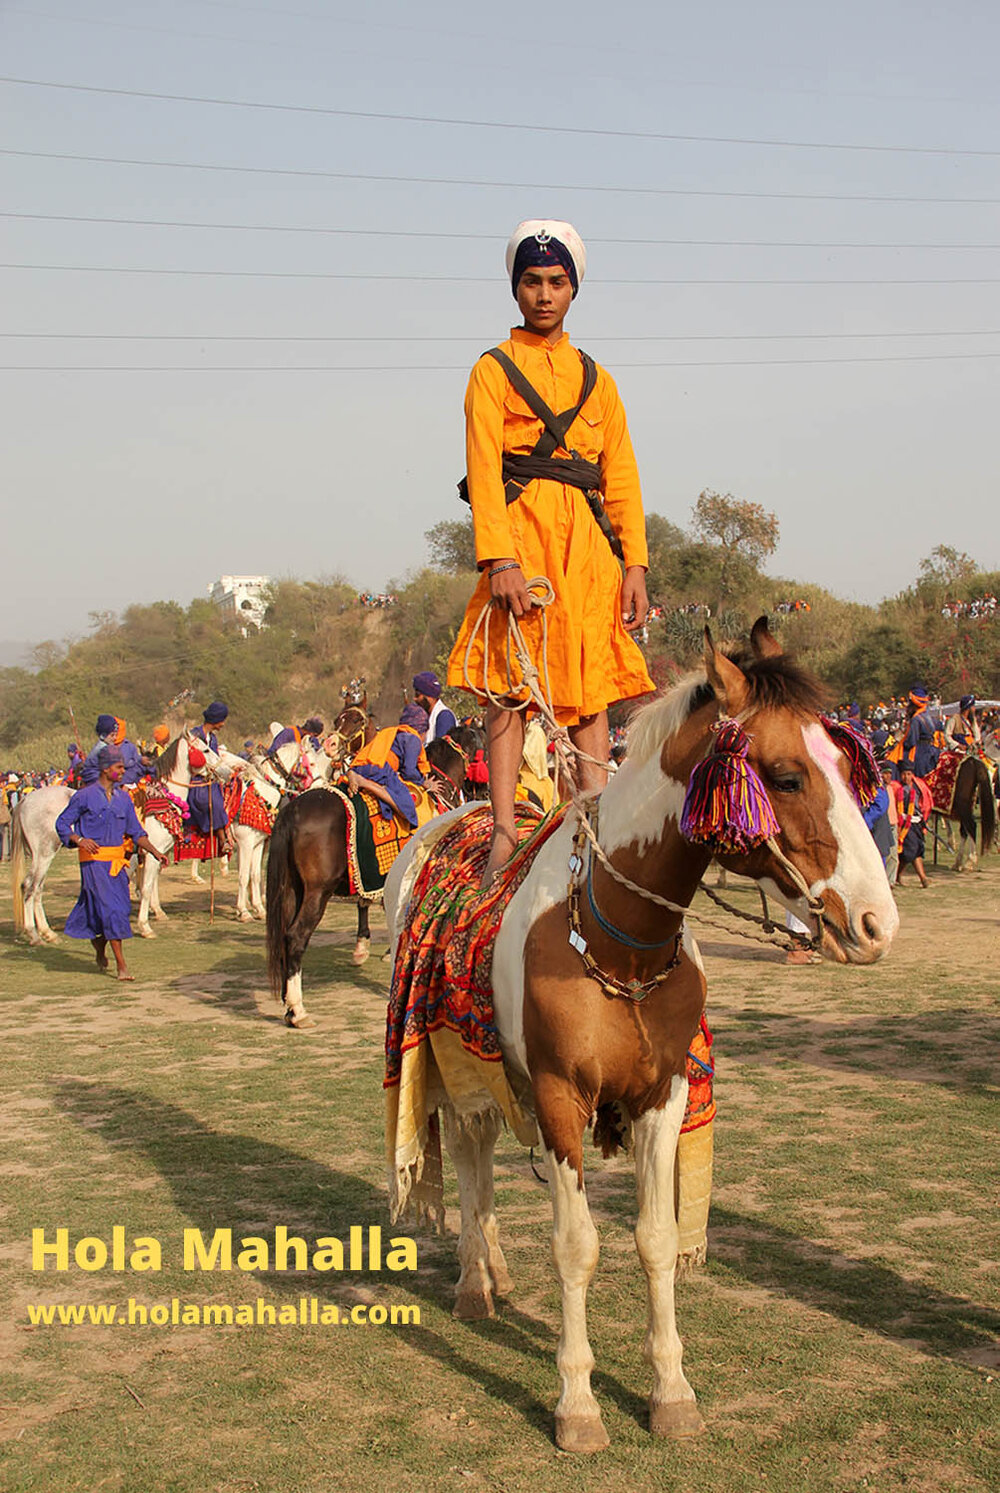 WM IMG_4589 kid stood on a horse in orange auto contrast crop.jpg